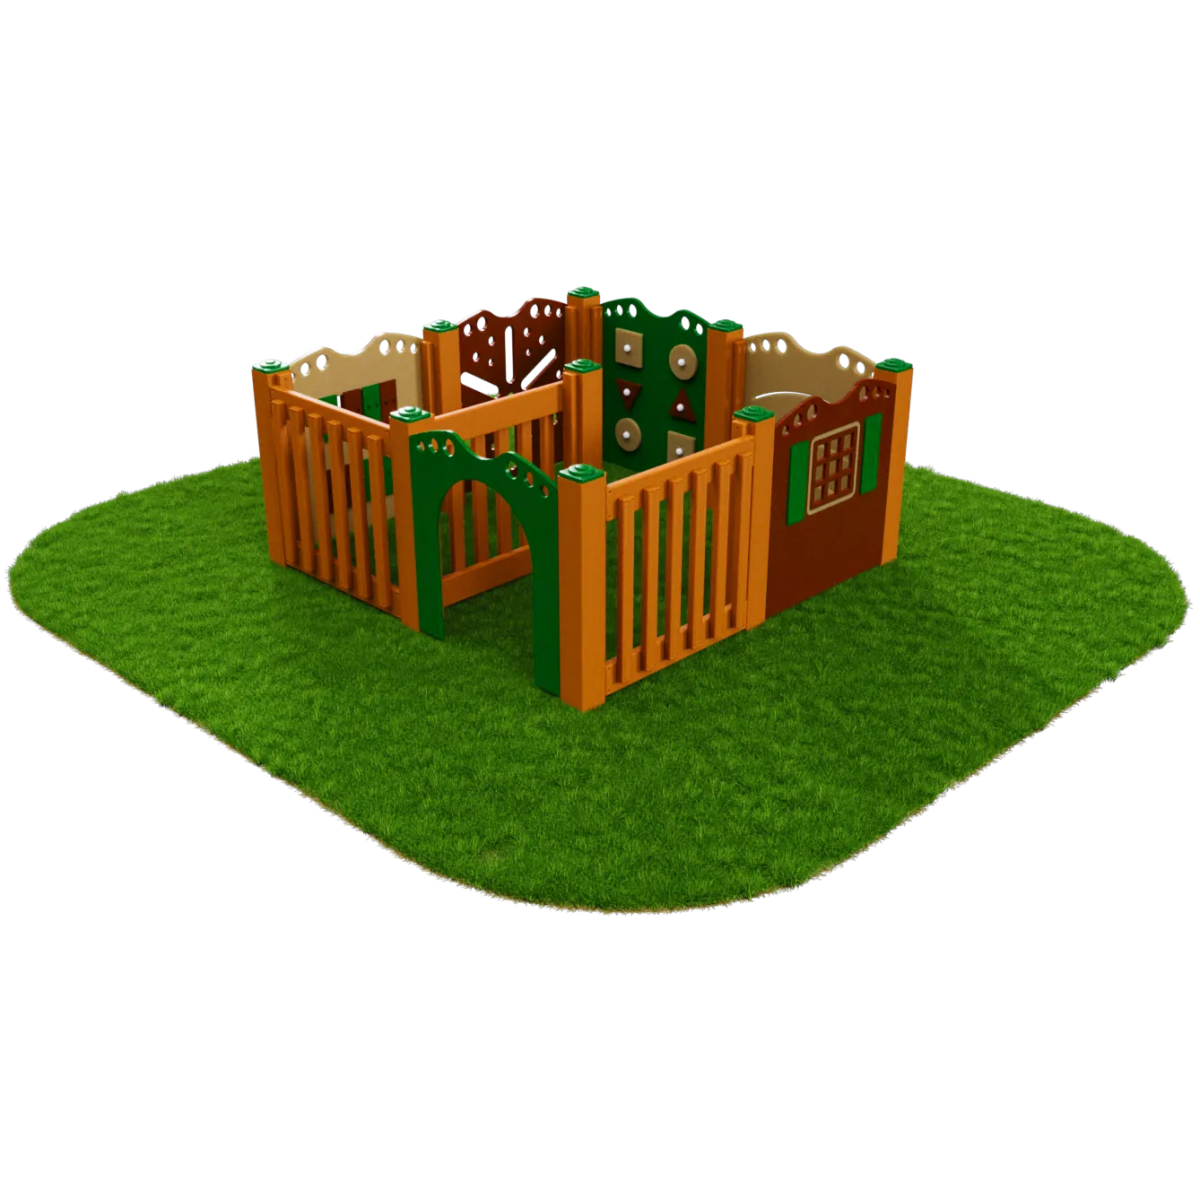 Twisty Turn Playset - Toddler Playgrounds - Playtopia, Inc.